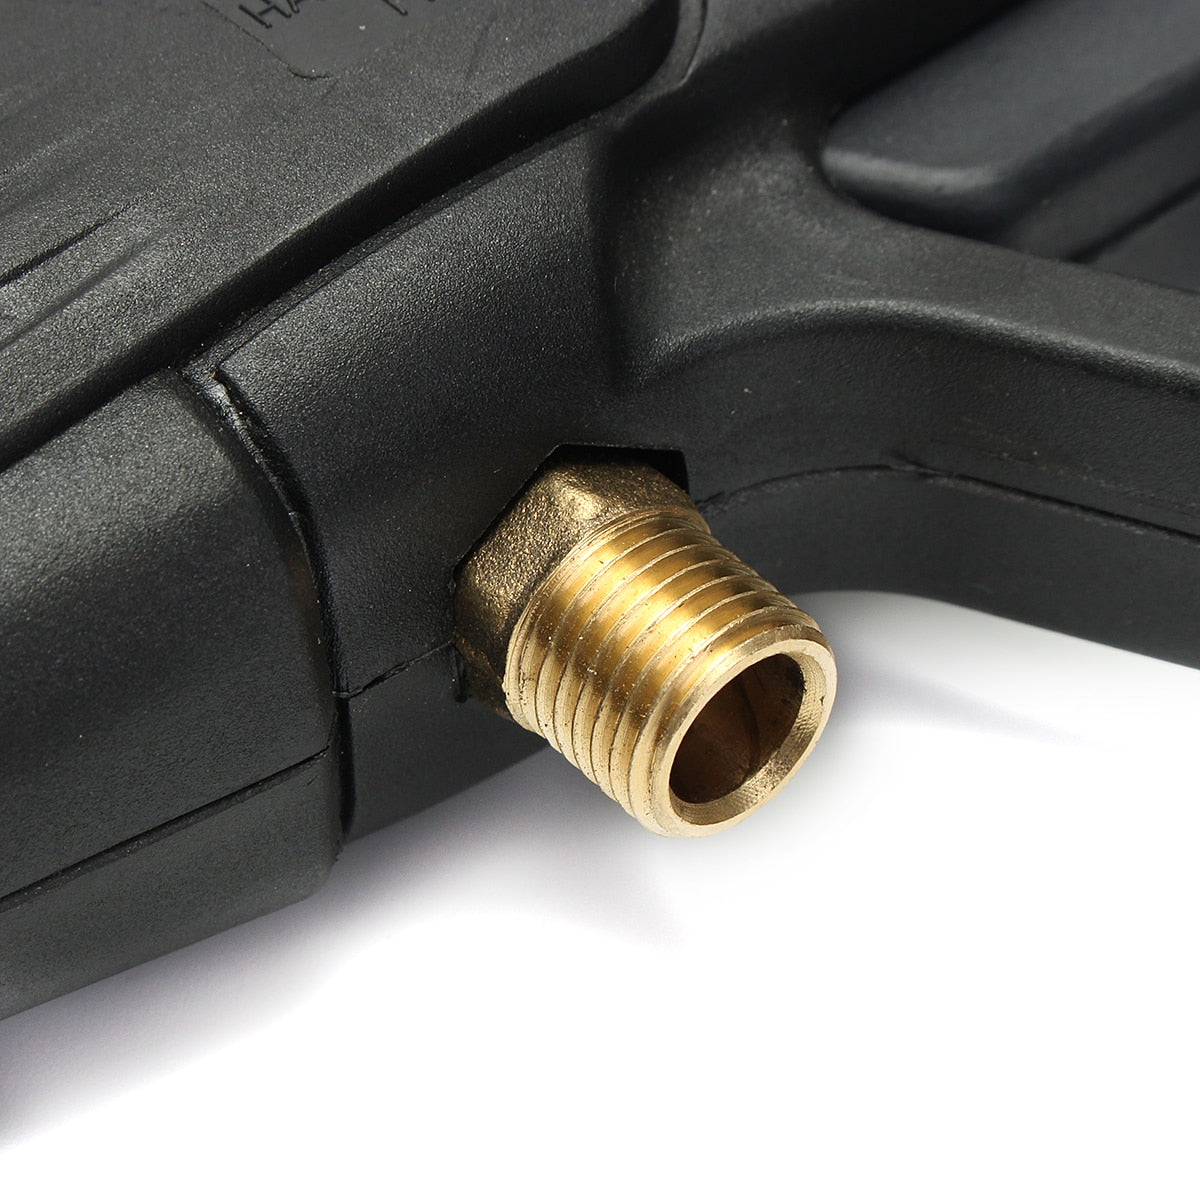 Adjustable High Pressure Hose Nozzle Spray Gun Adapter